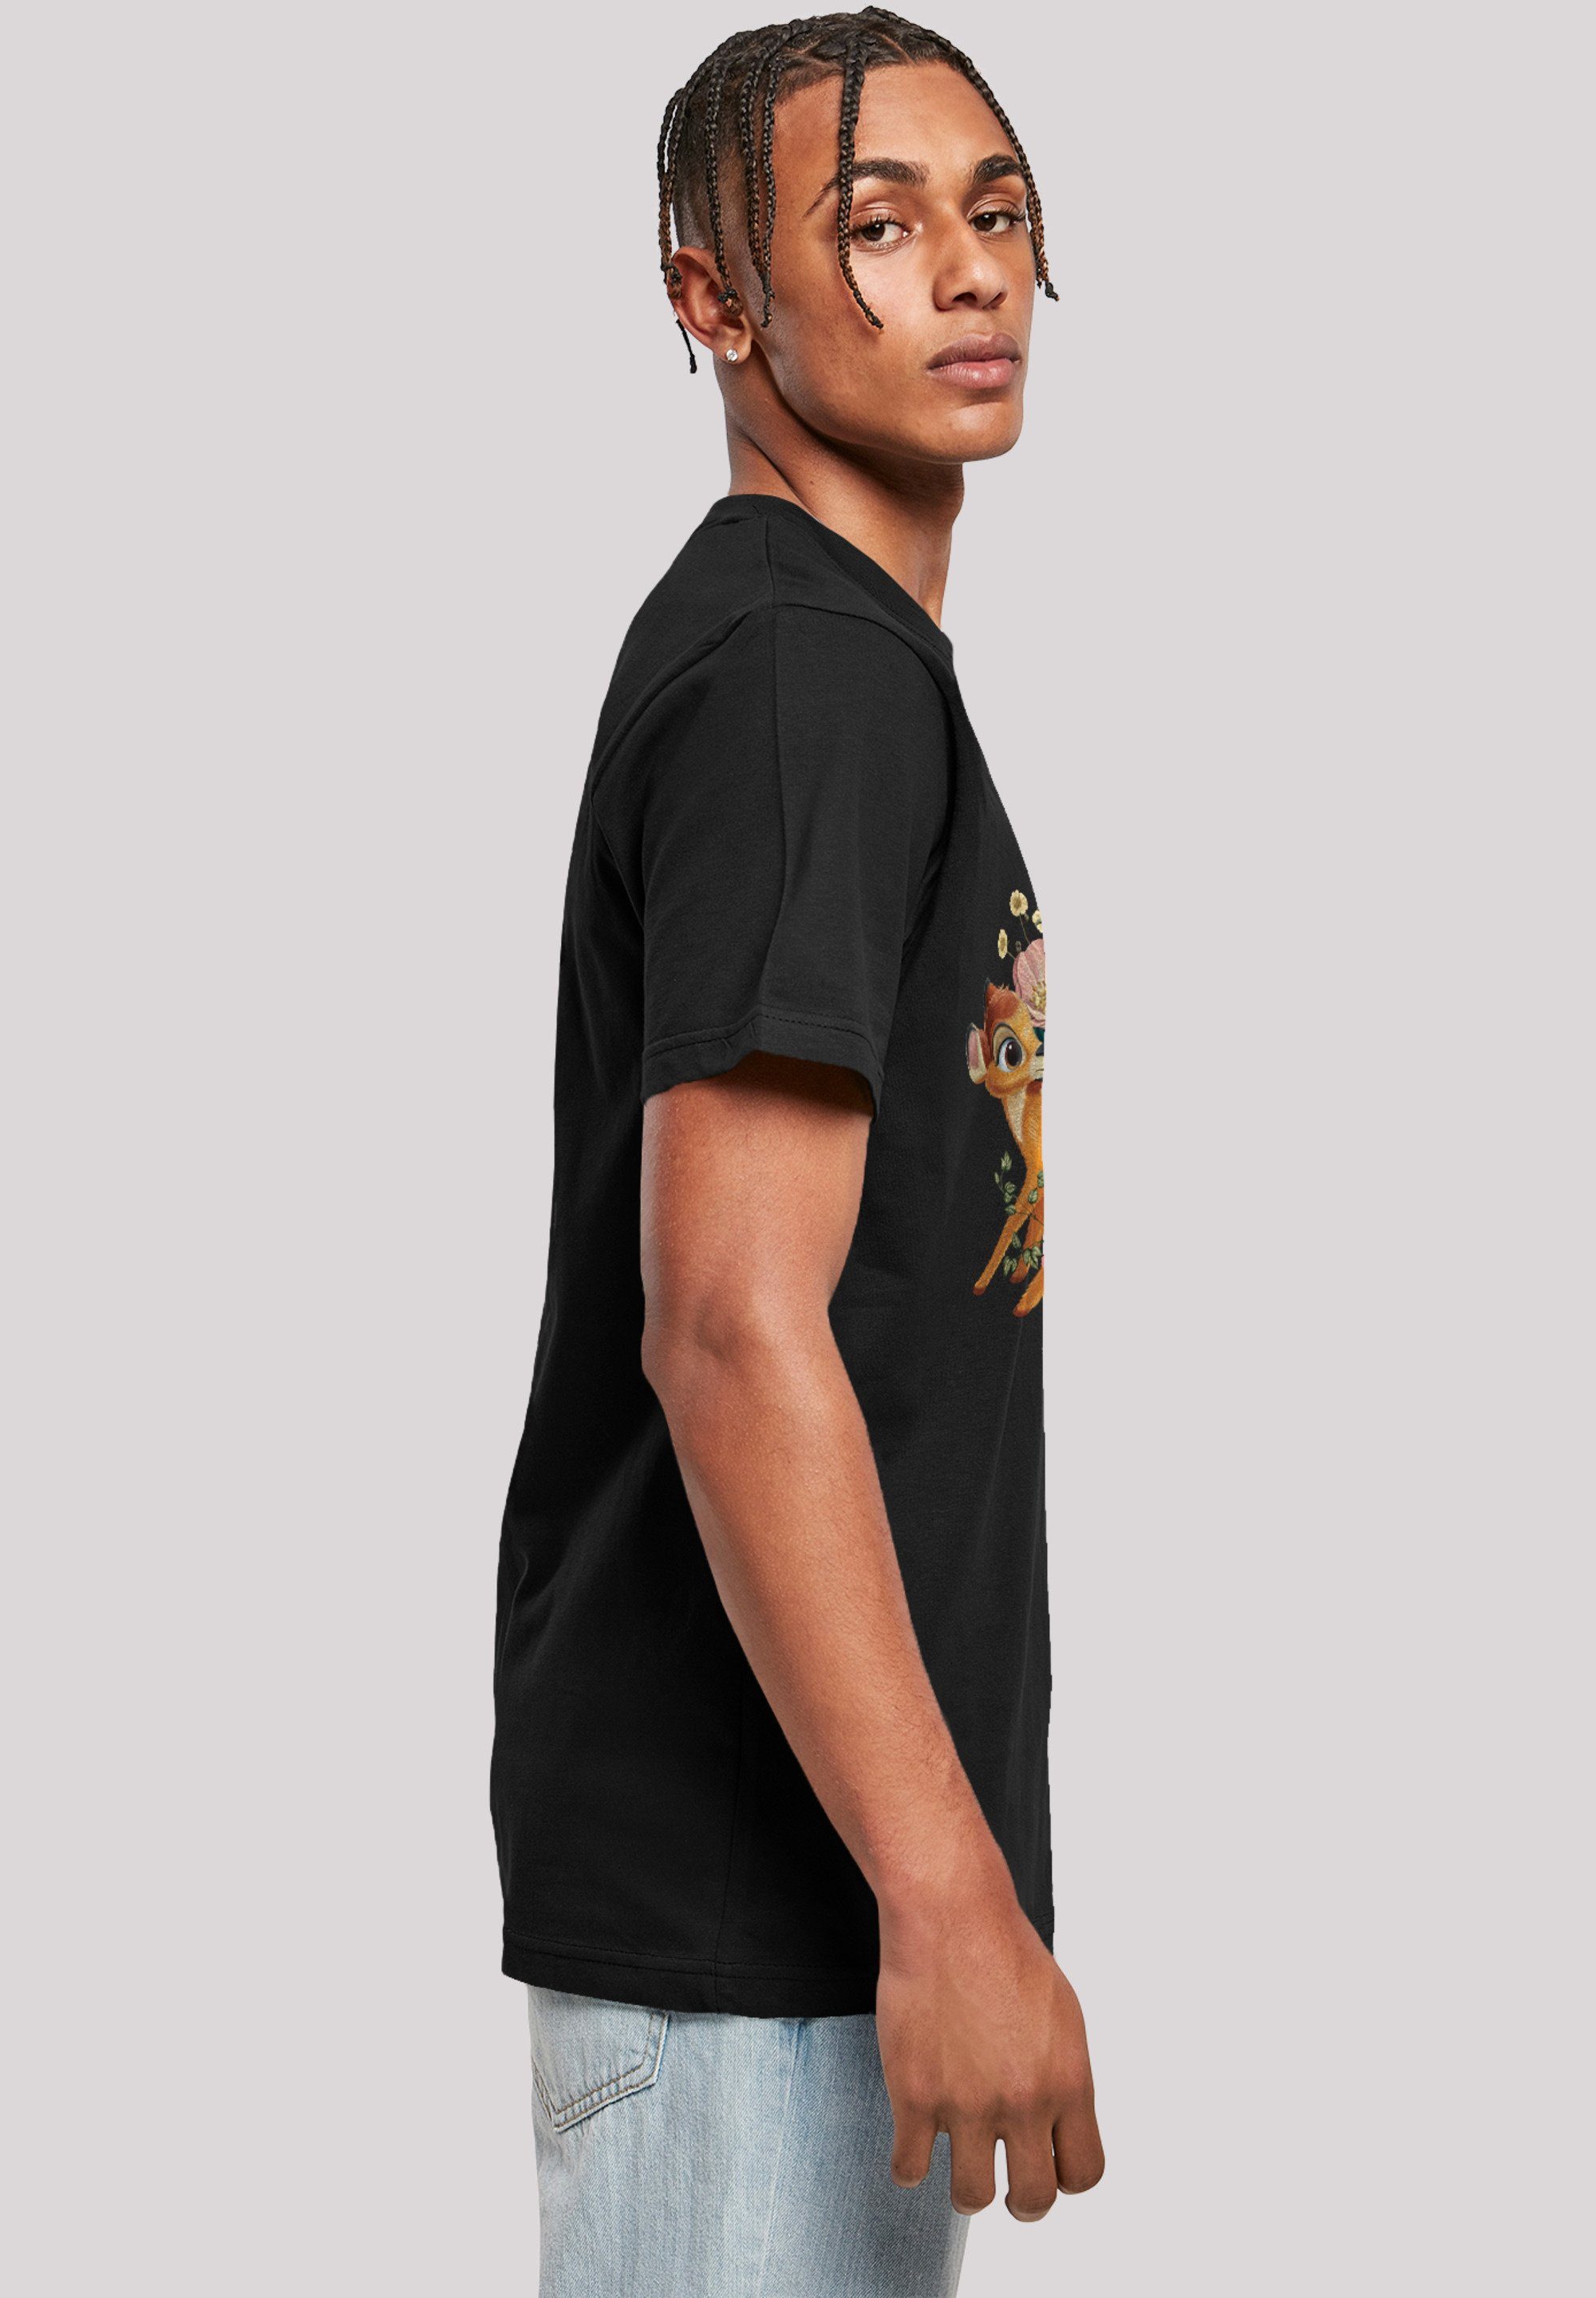 schwarz Disney Bambi Meadow Merch,Regular-Fit,Basic,Bedruckt T-Shirt F4NT4STIC Herren,Premium